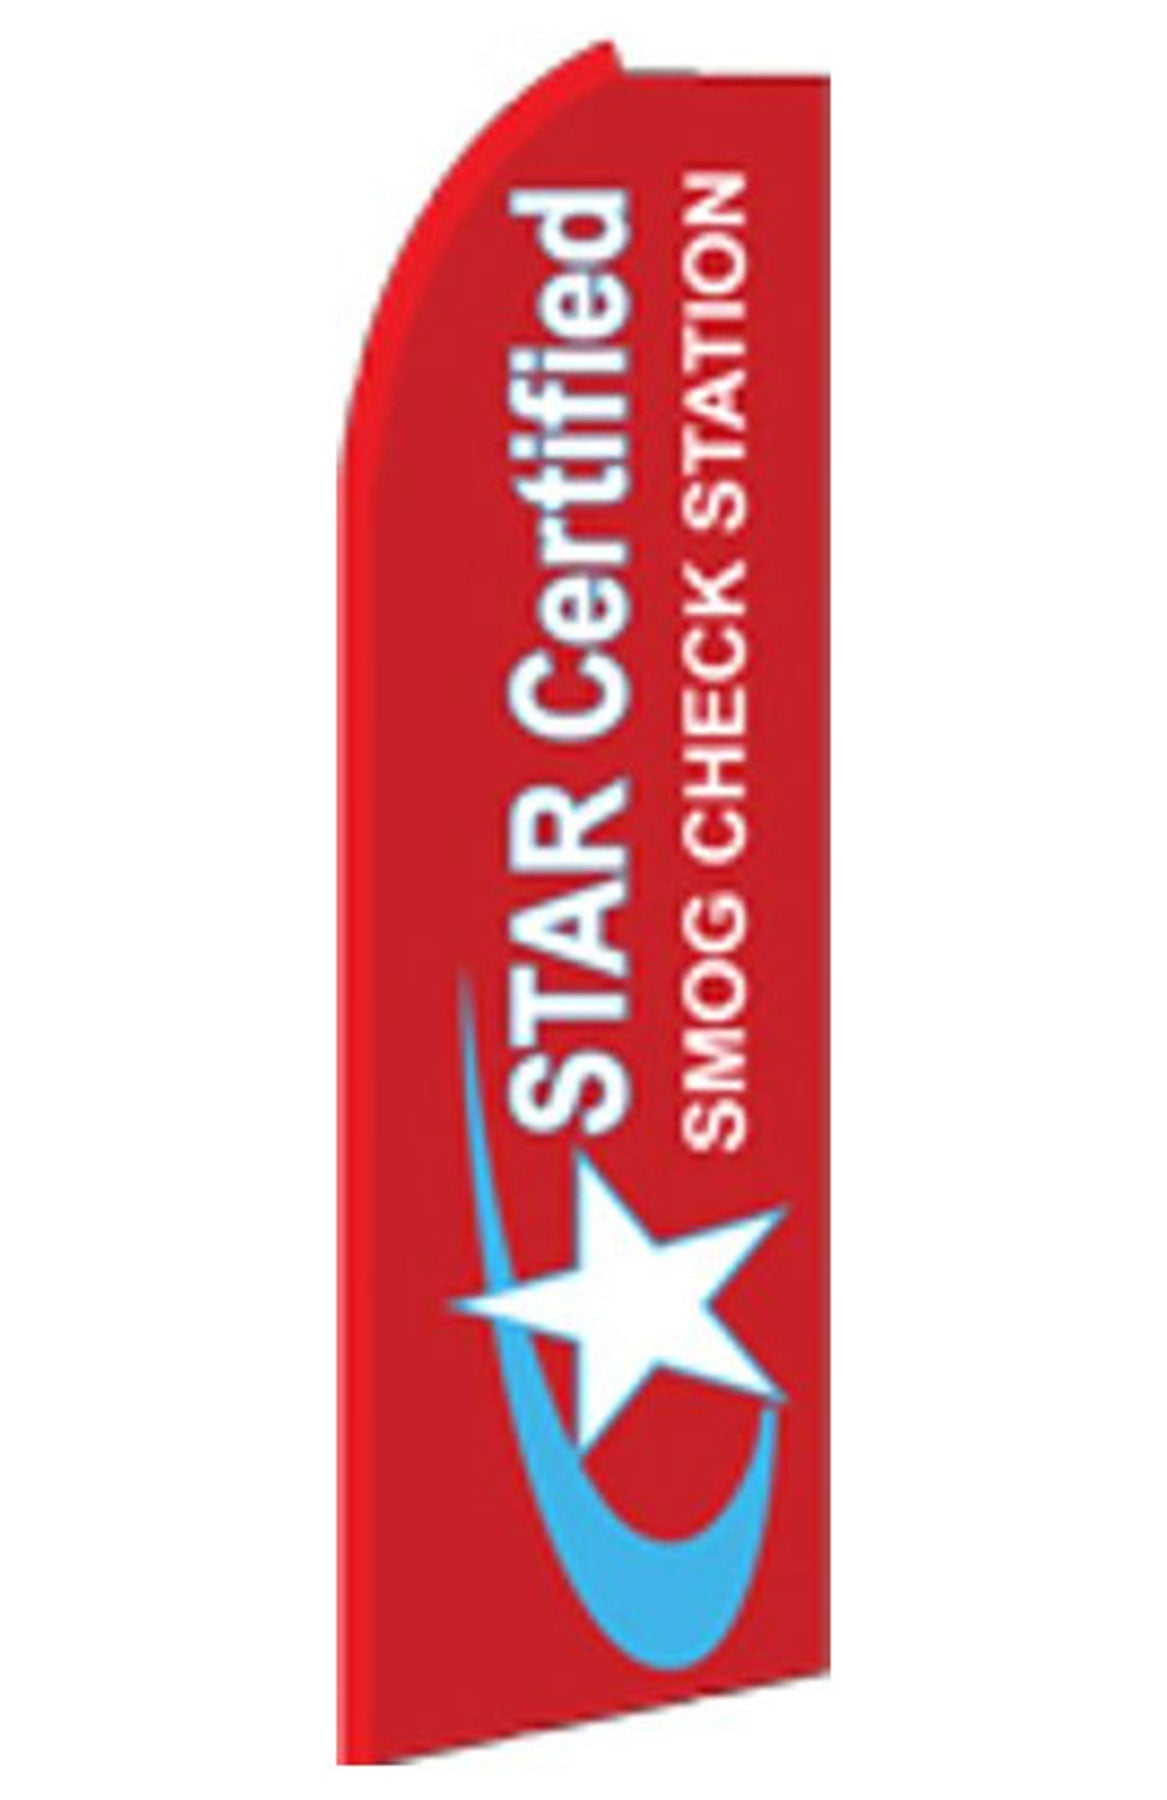 Smog Check Star Certified